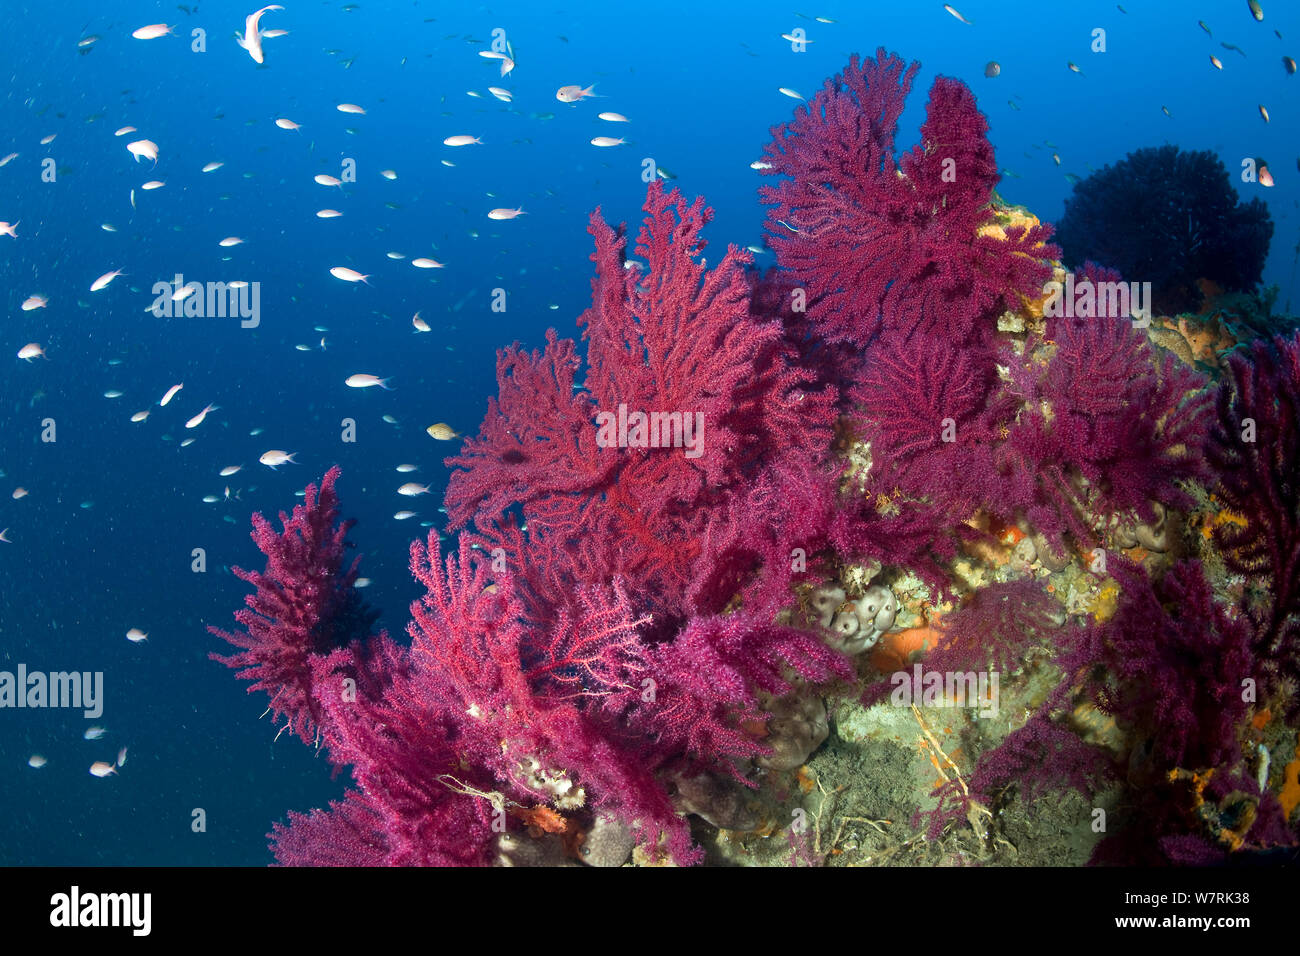 Red seafan (Paramuricea clavata) and fish, Ischia Island, Italy, Tyrrhenian Sea, Mediterranean Stock Photo